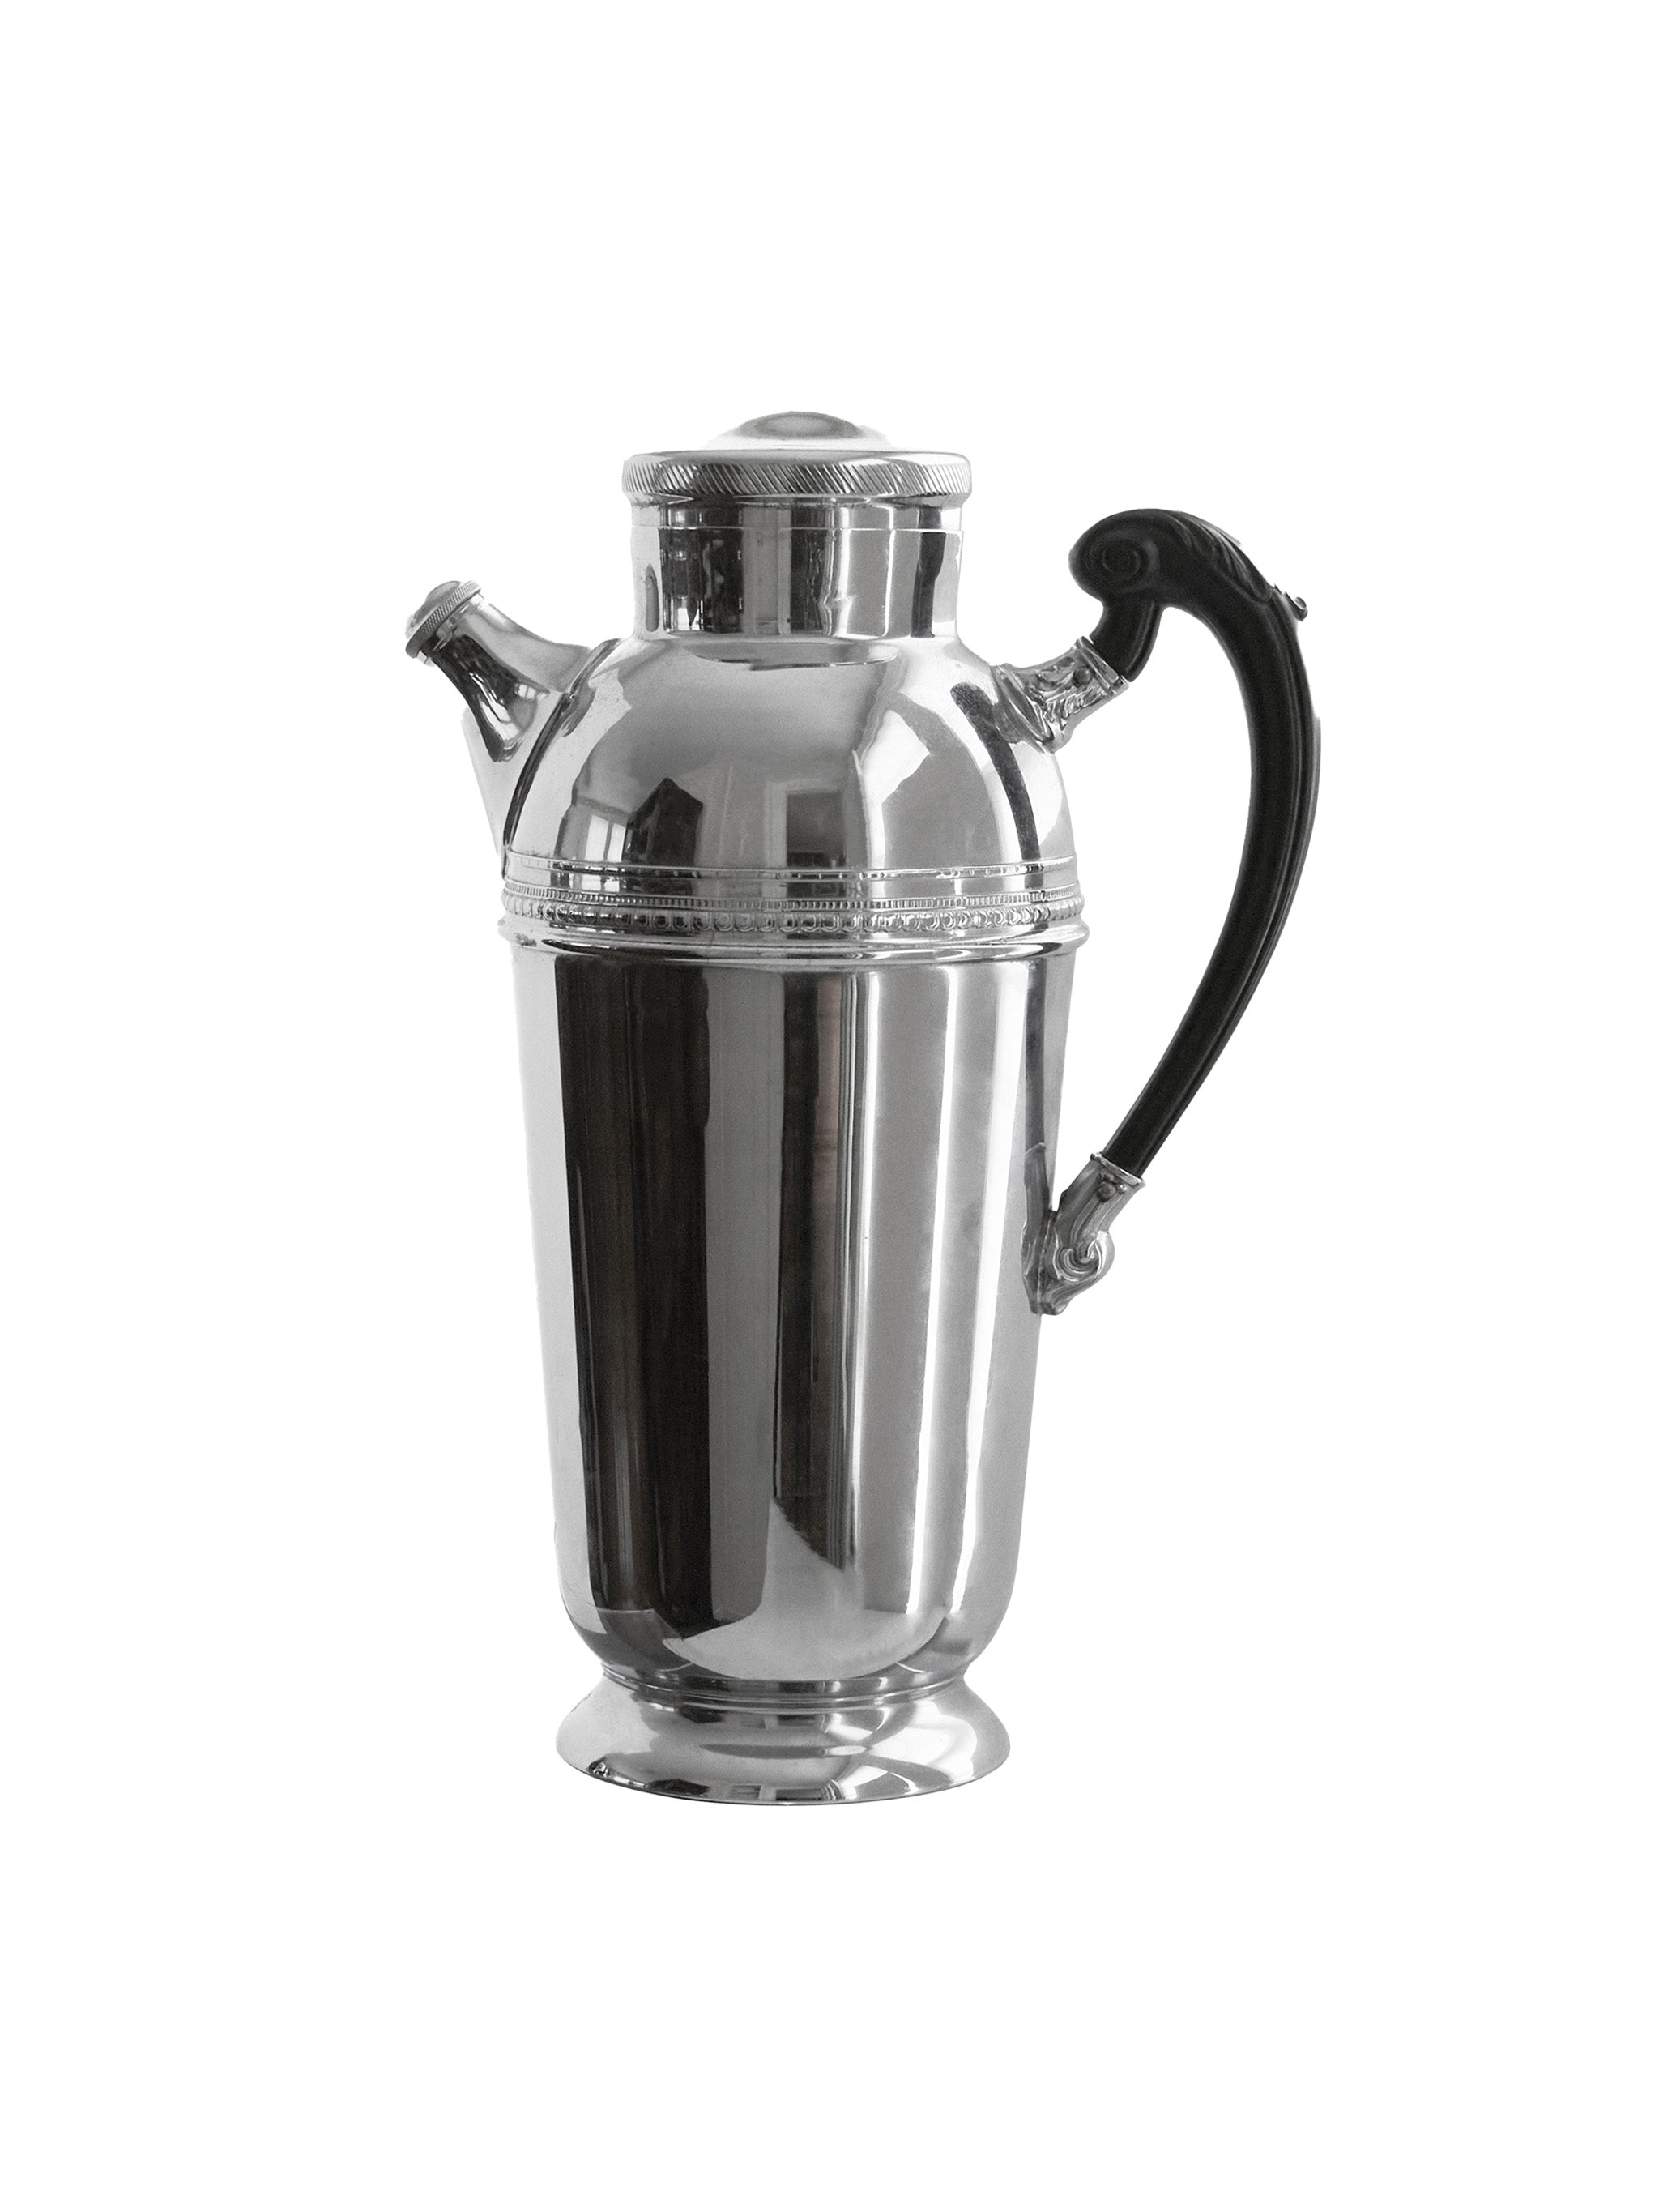 MANHATTAN cocktail shaker in Art Deco inspired stainless steel